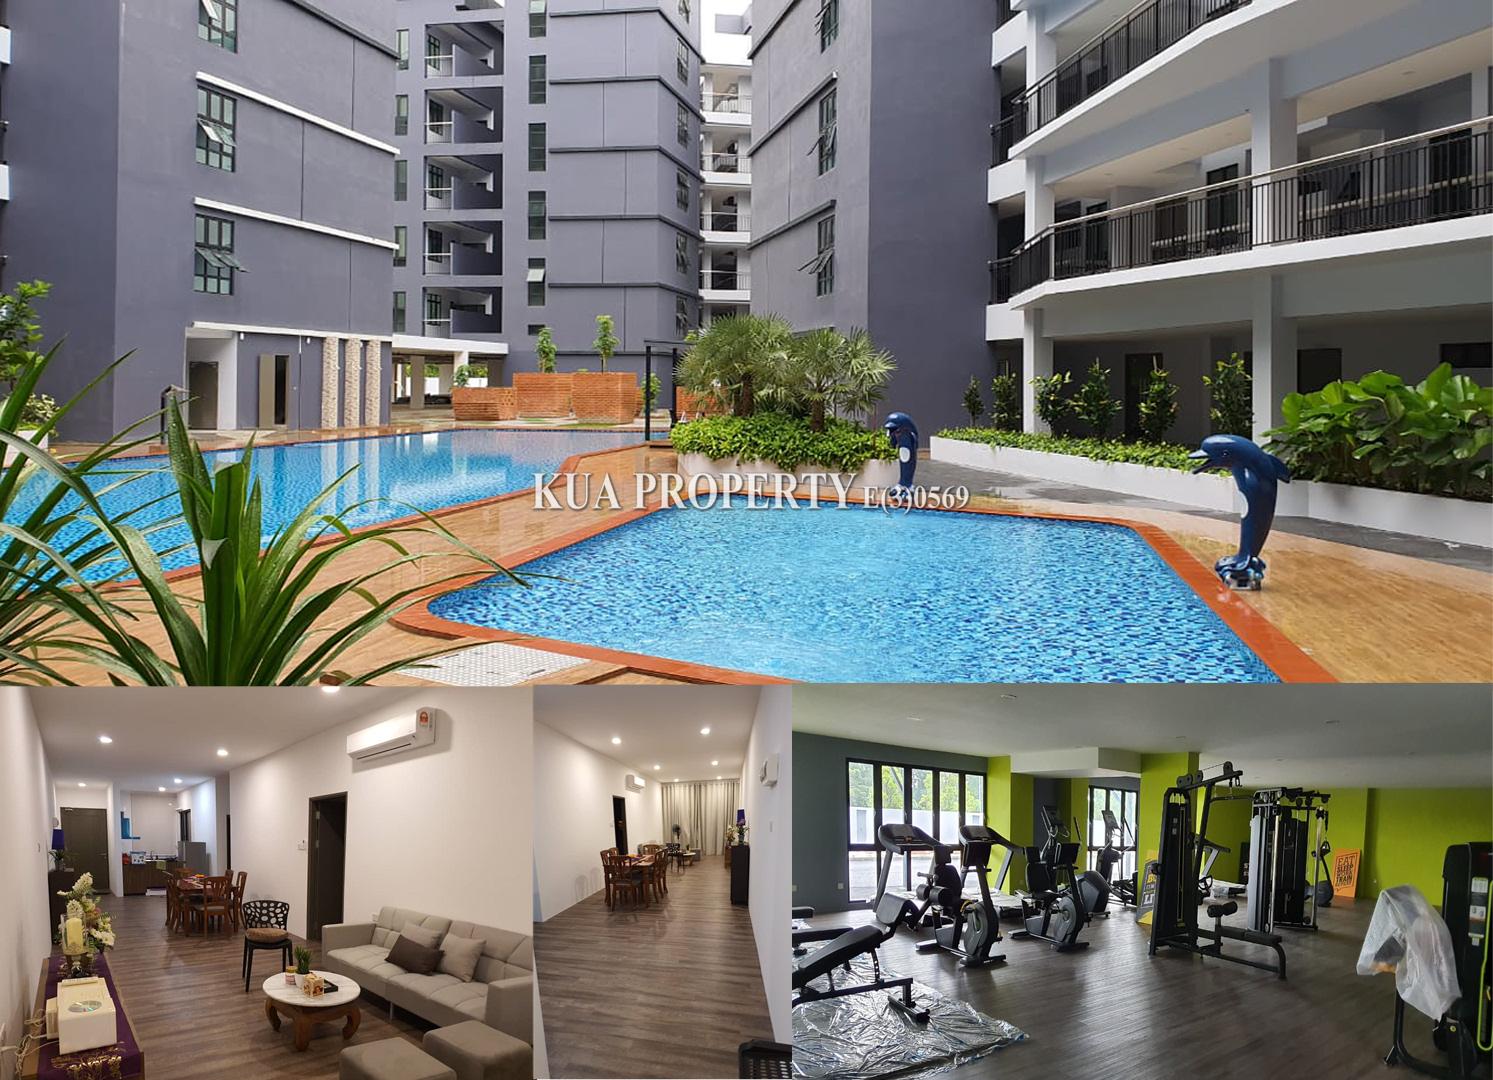 Royal Oak Condominium For Rent! at Jalan Stutong Baru Kuching